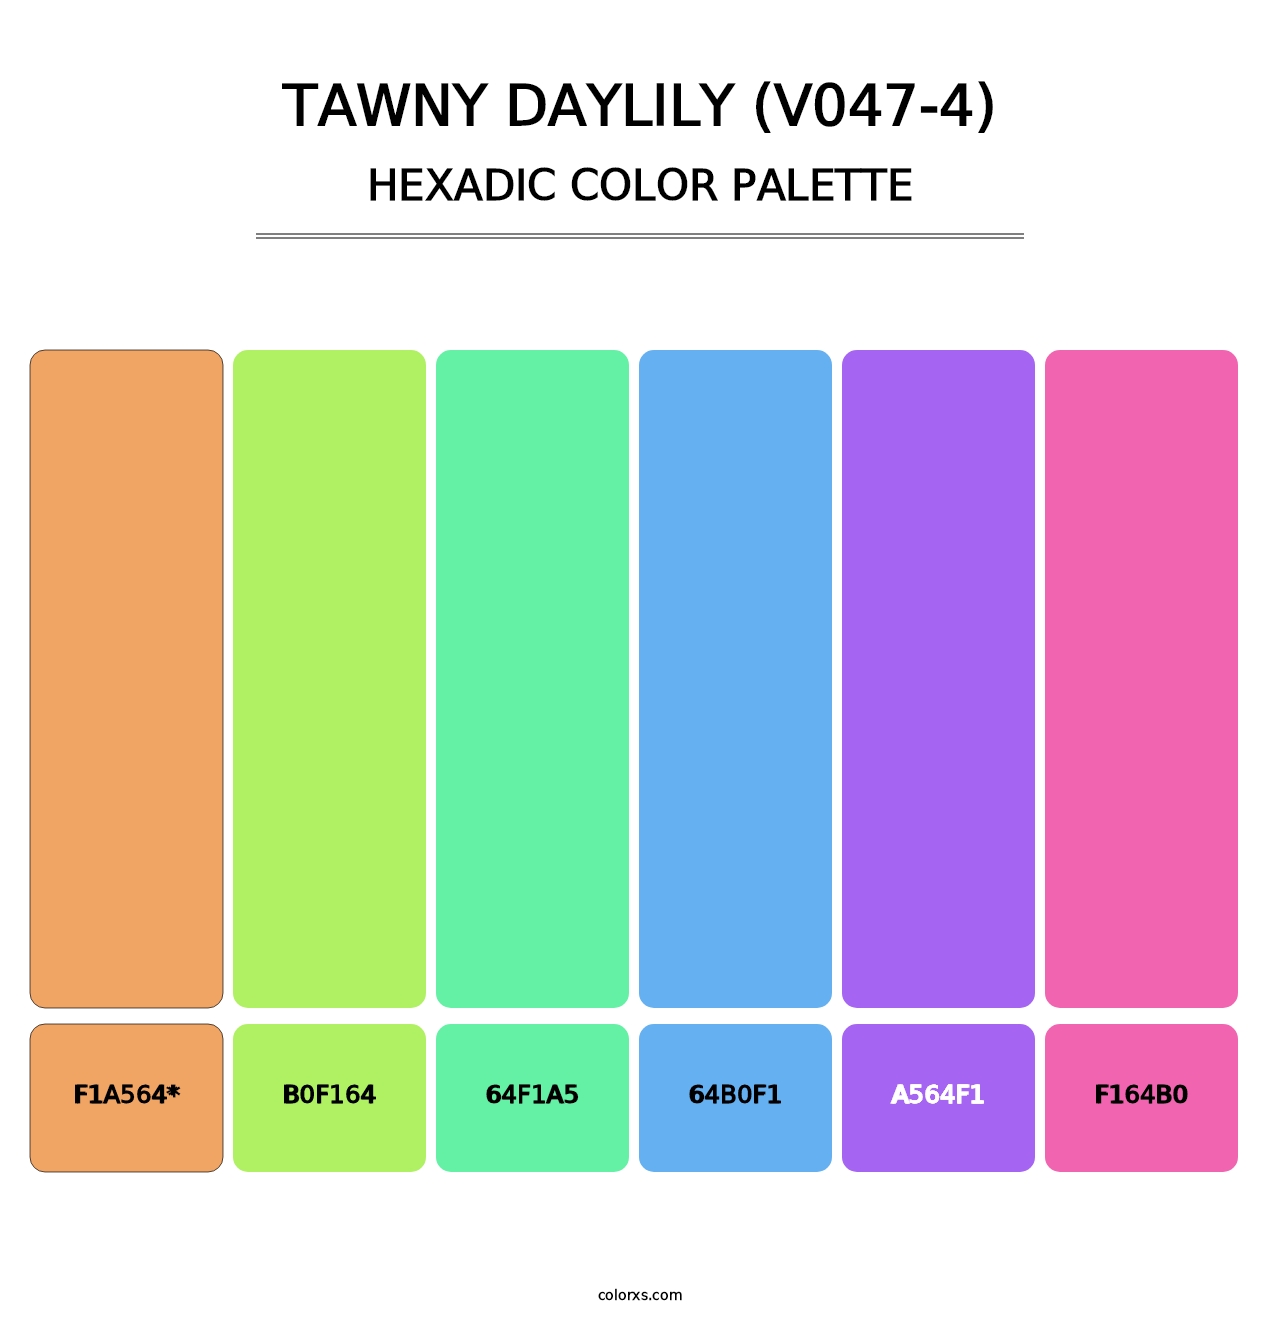 Tawny Daylily (V047-4) - Hexadic Color Palette